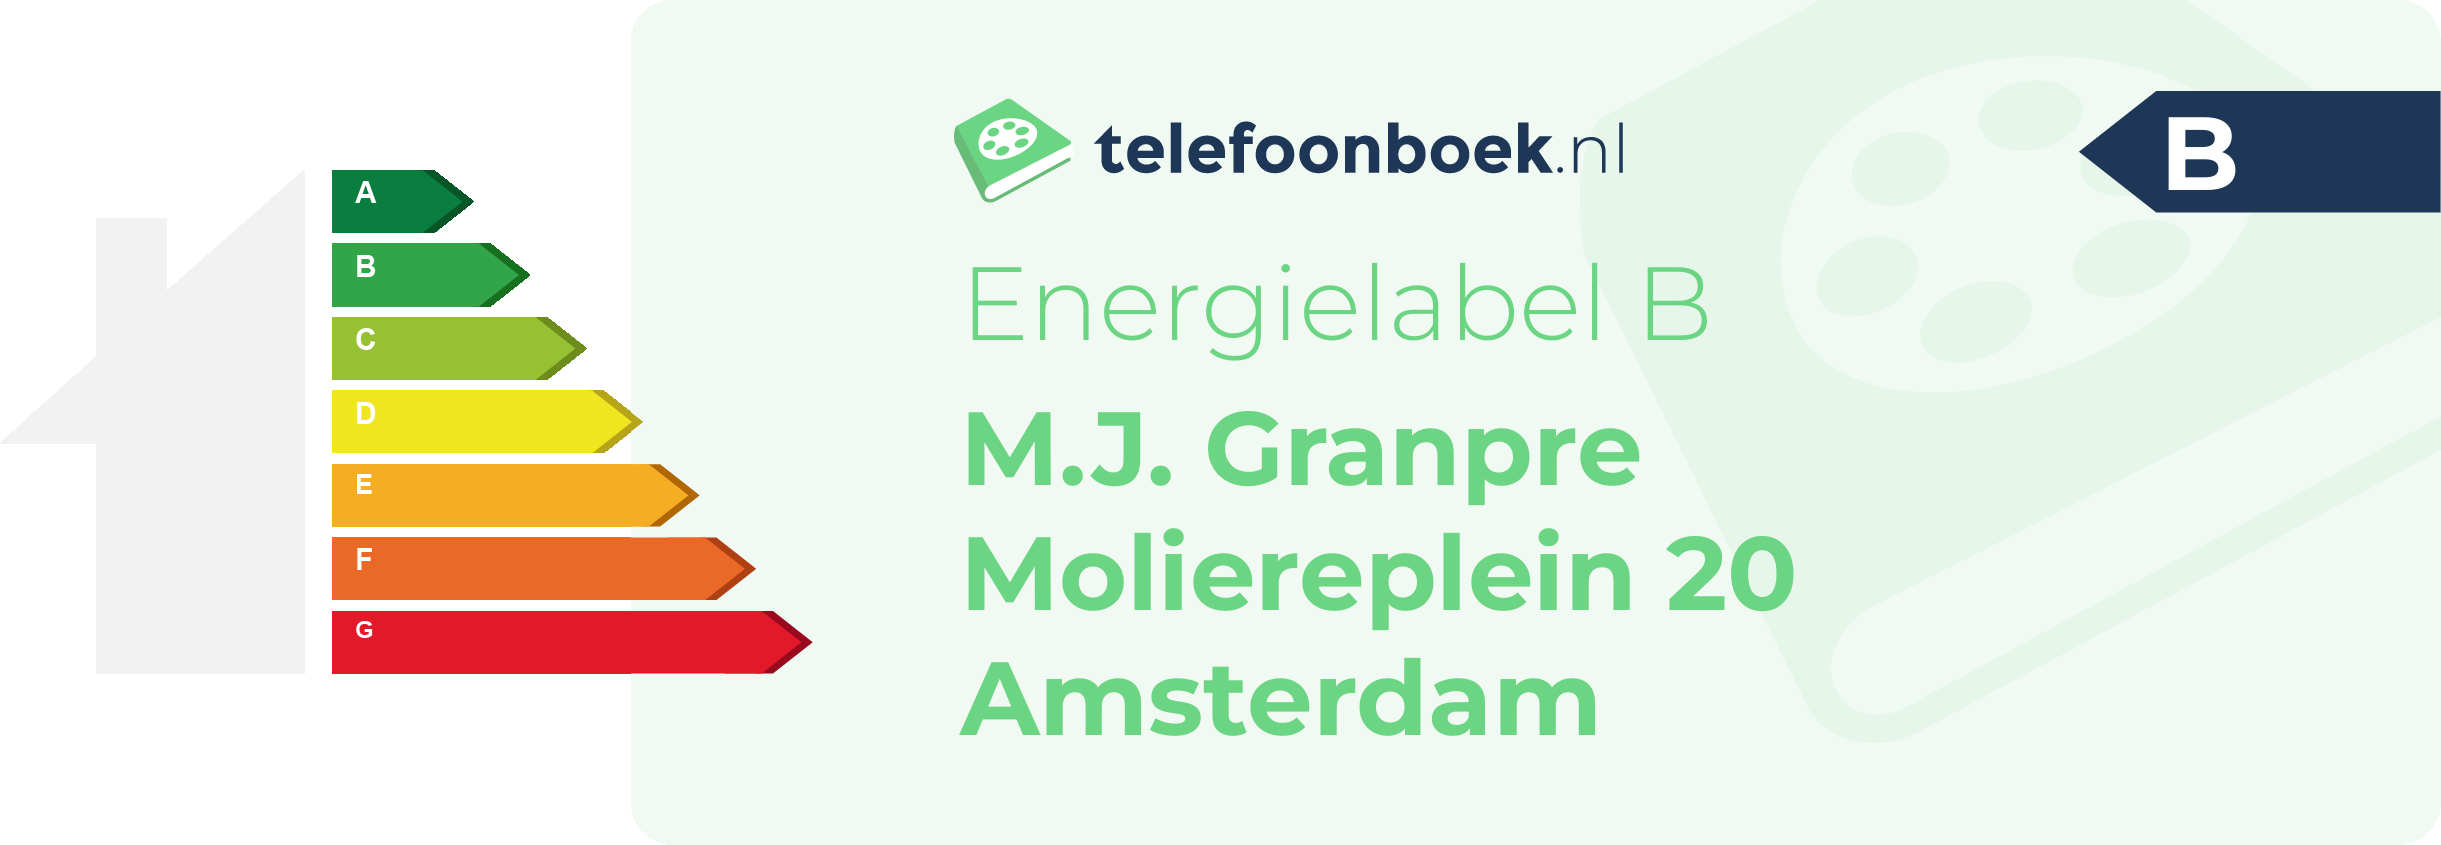 Energielabel M.J. Granpre Moliereplein 20 Amsterdam